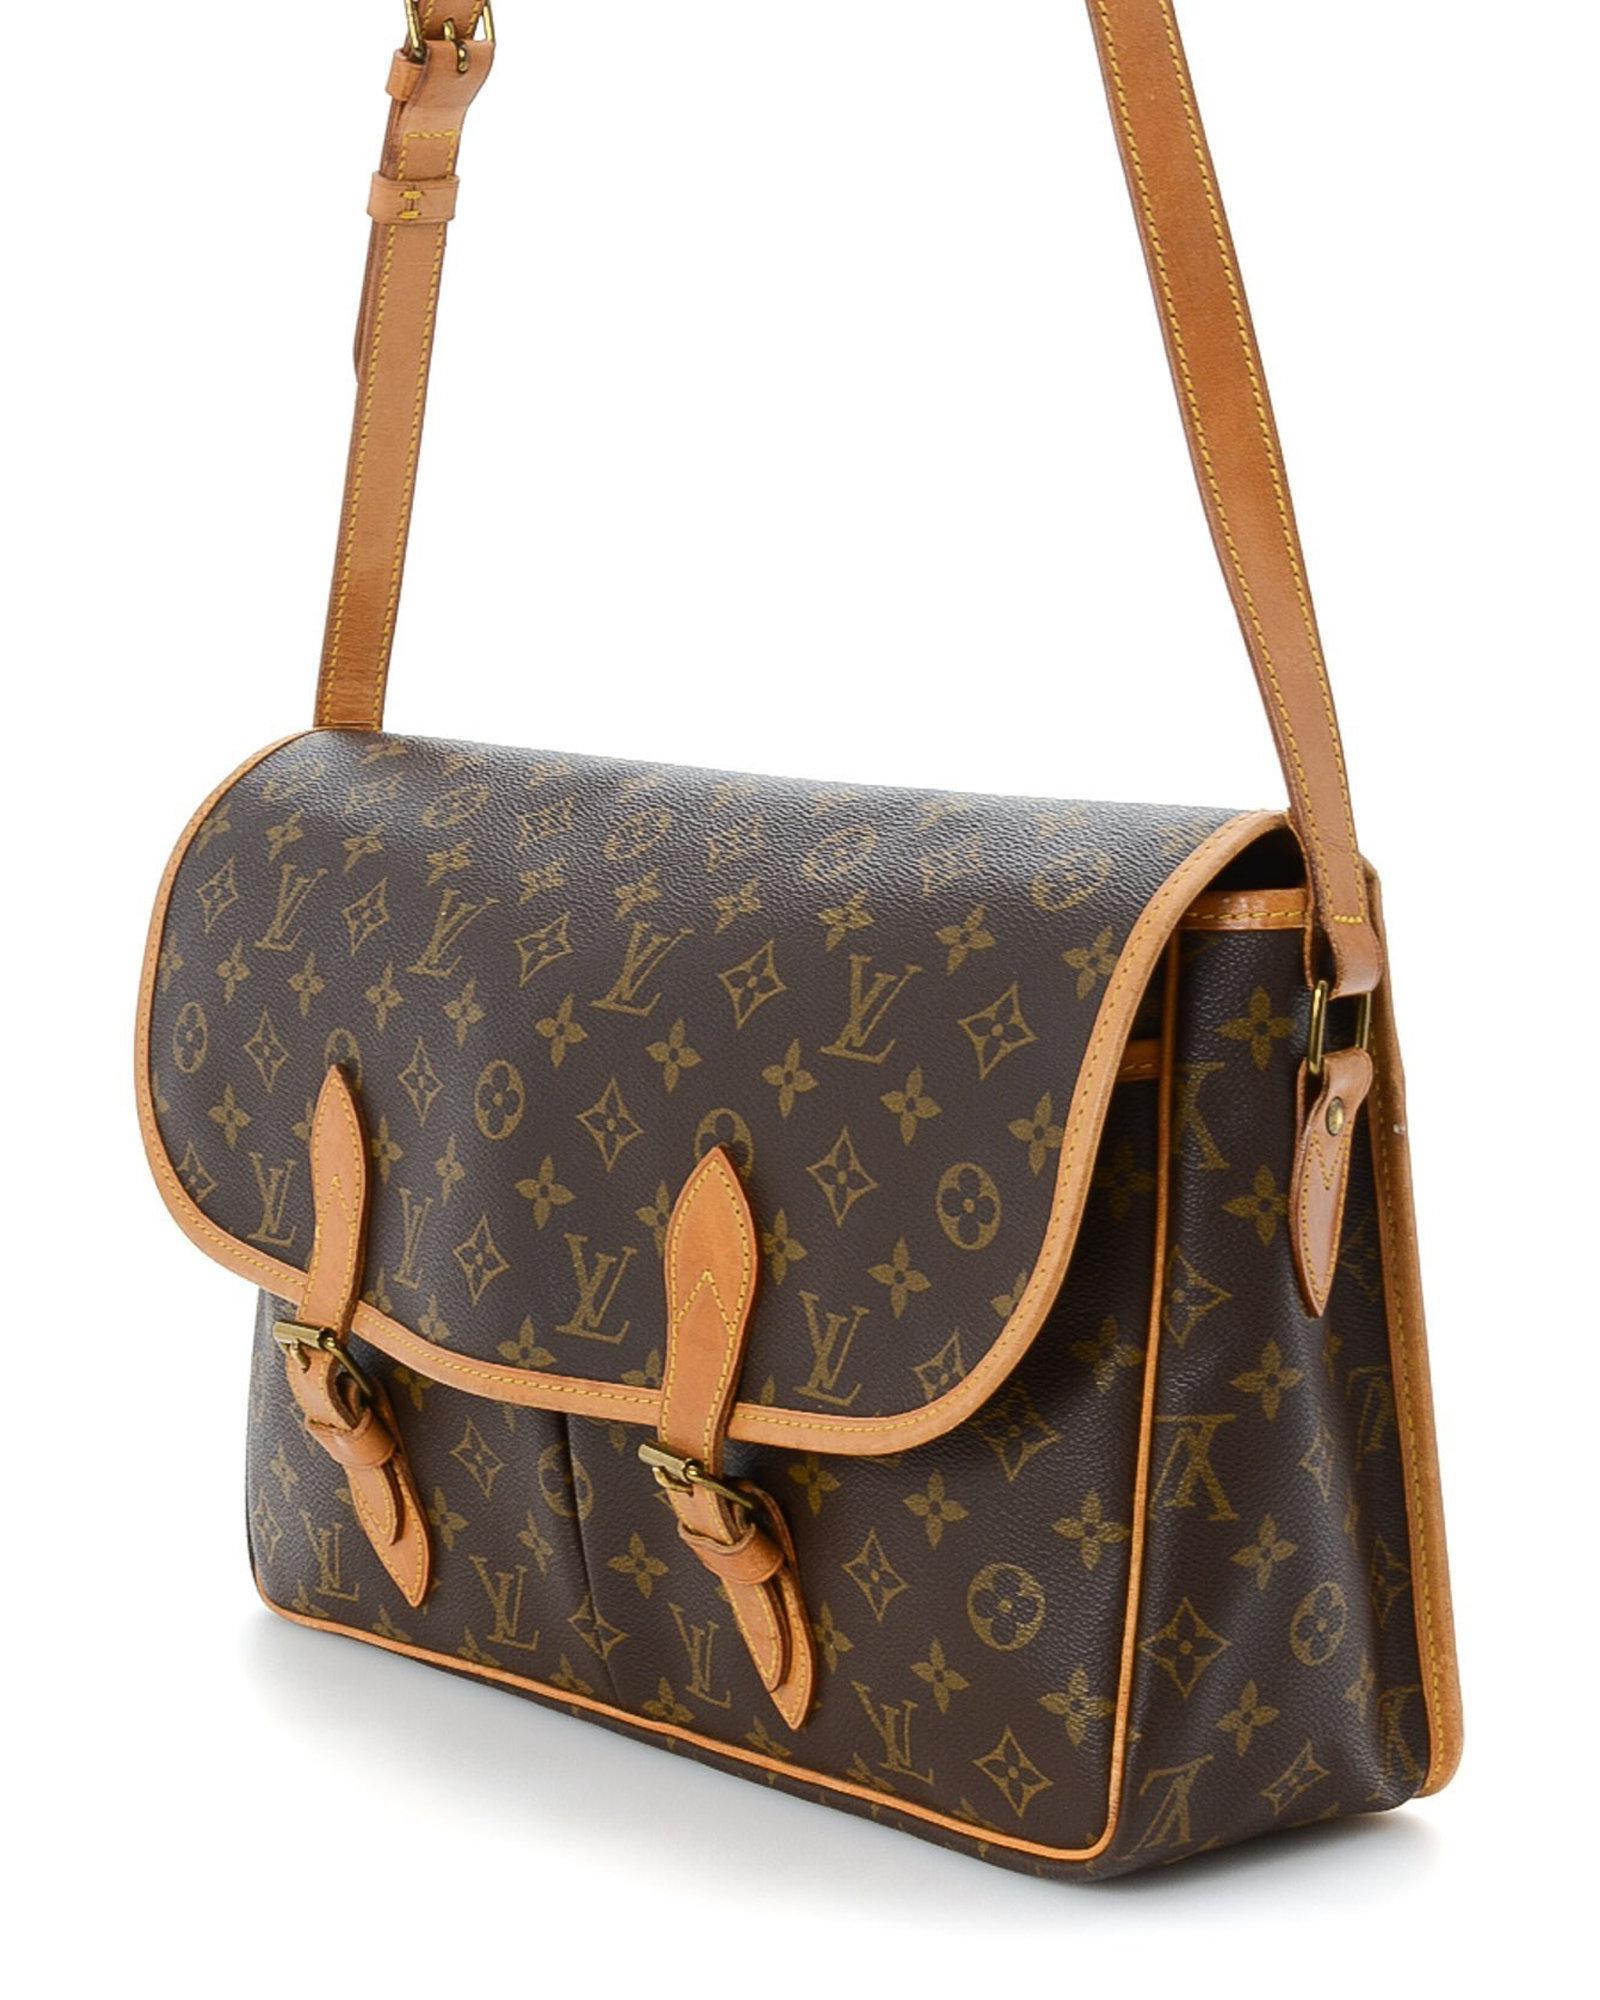 Louis Vuitton Canvas Sac Gibeciere Gm Messenger Bag - Vintage in Brown for Men - Lyst